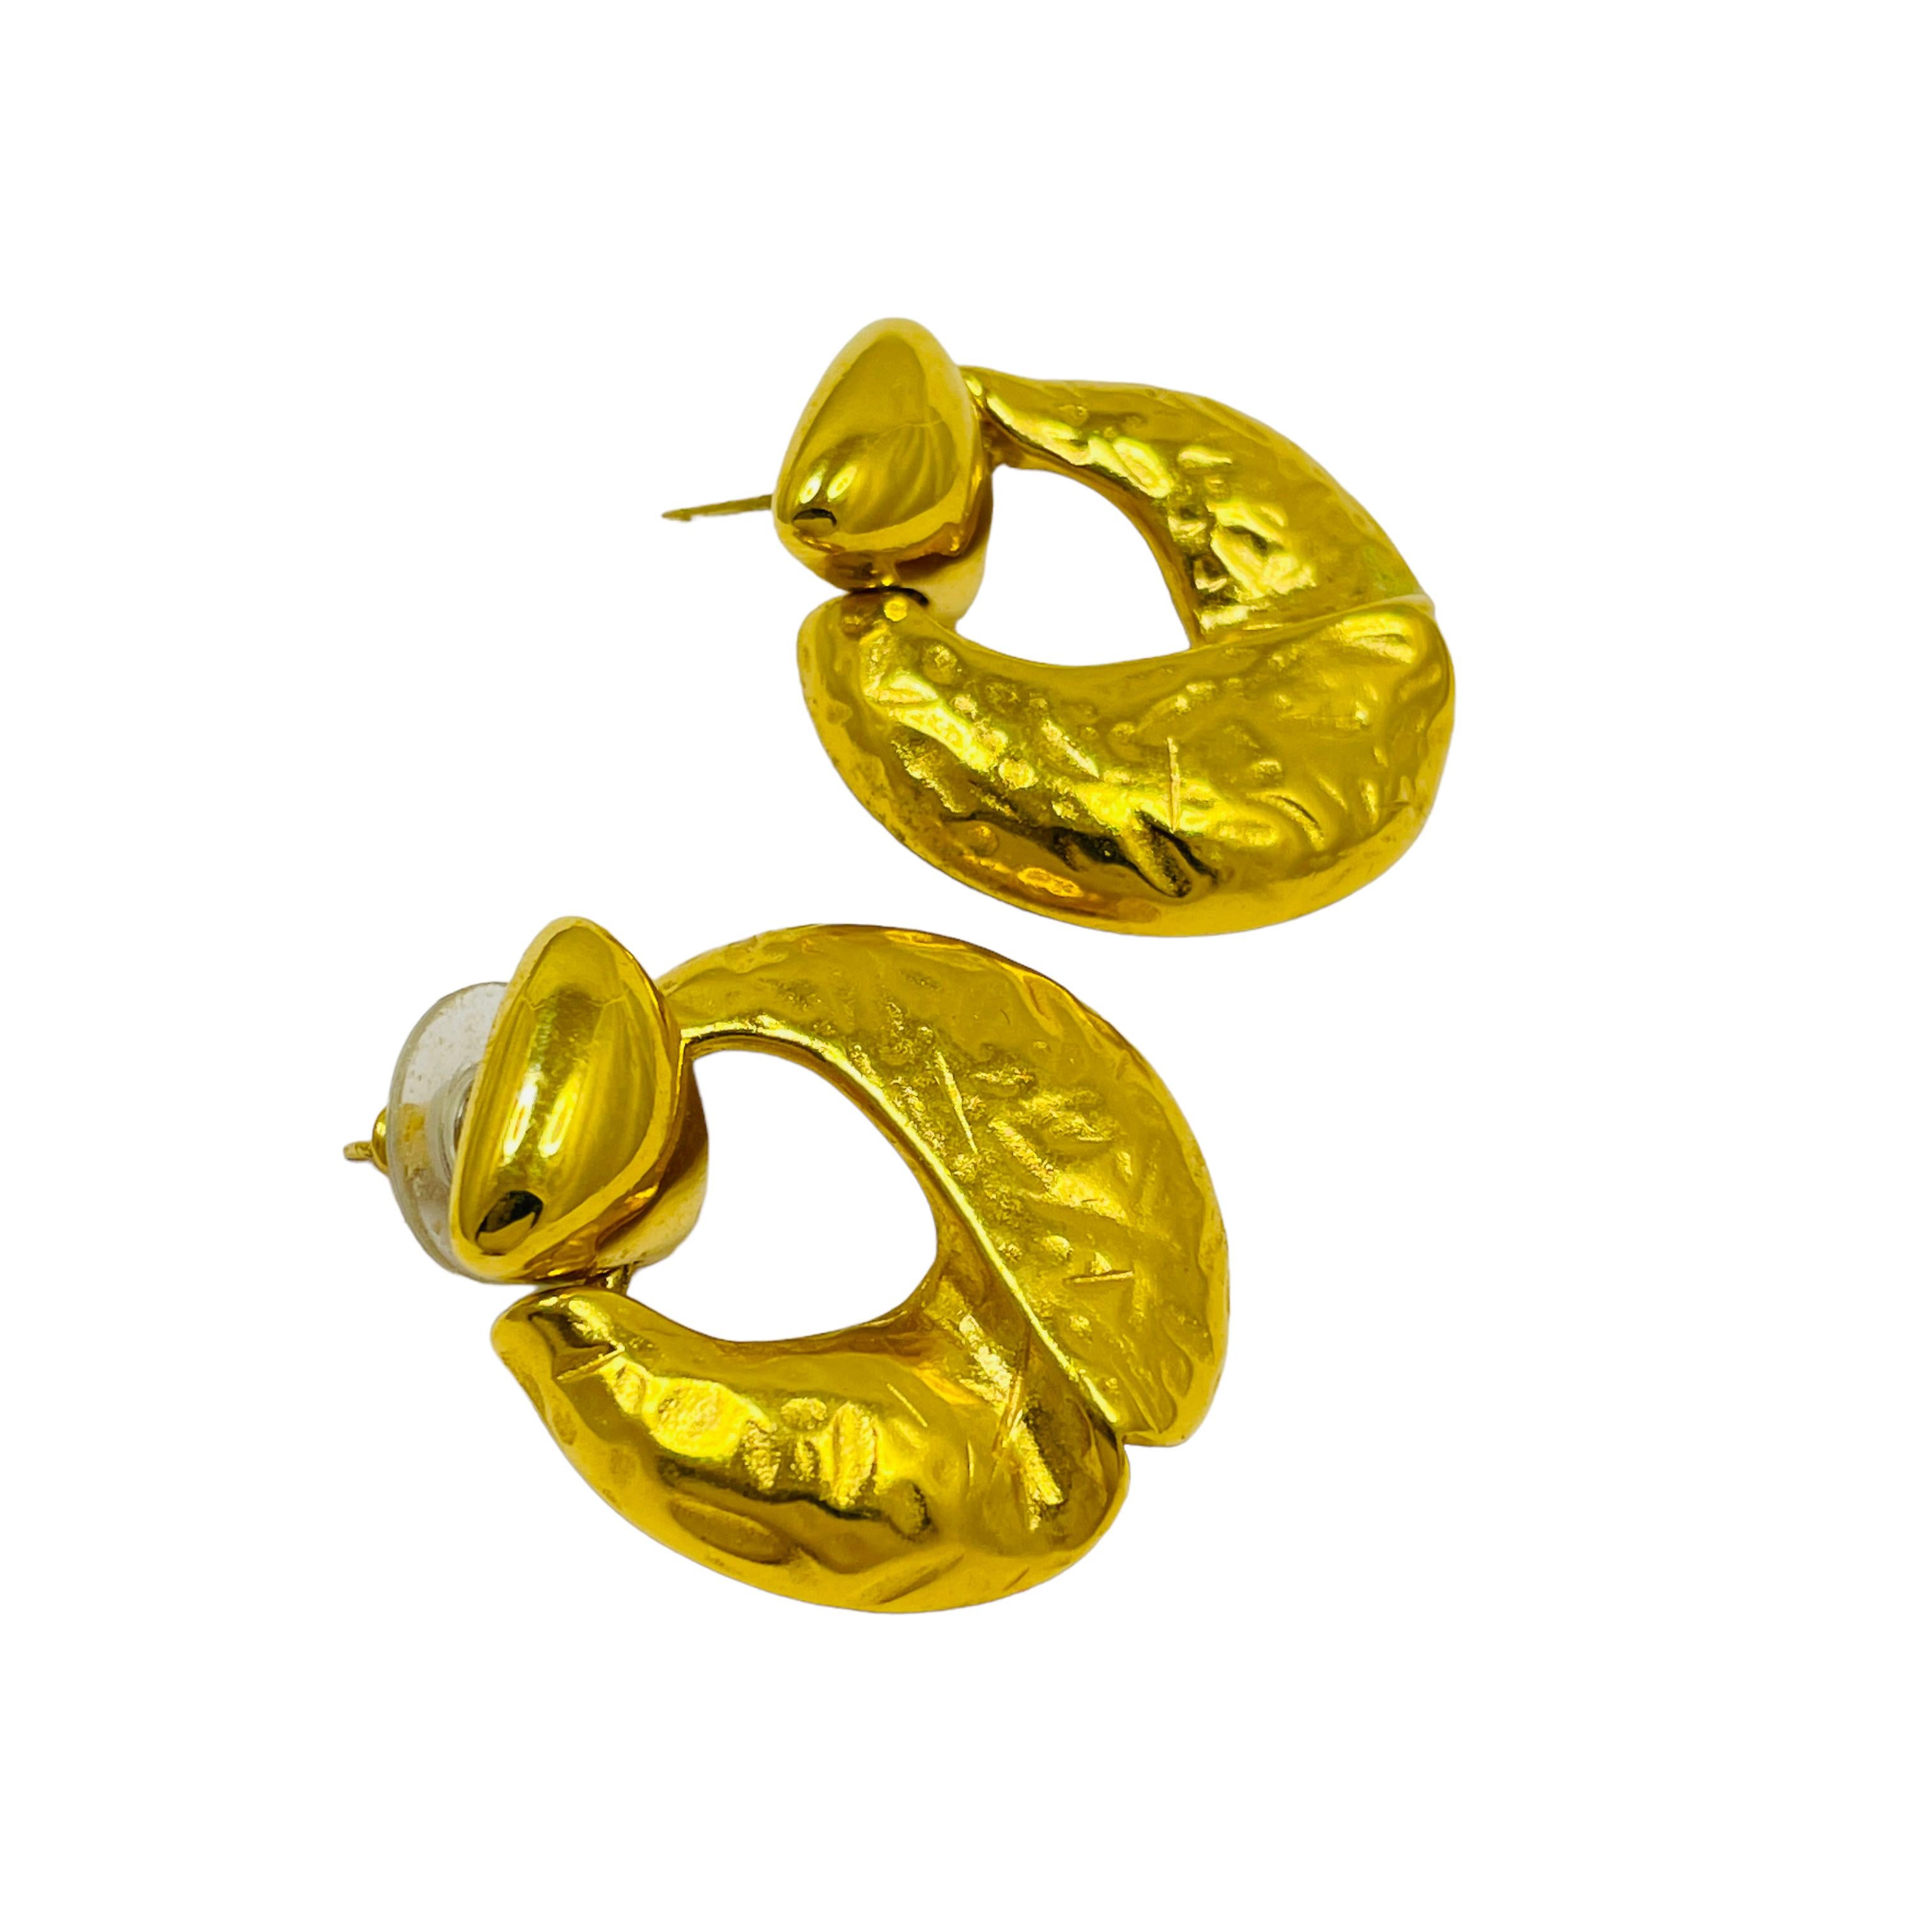 DETAILS

• unsigned

• gold tone 

• vintage designer clip on earrings

MEASUREMENTS

• 1.25